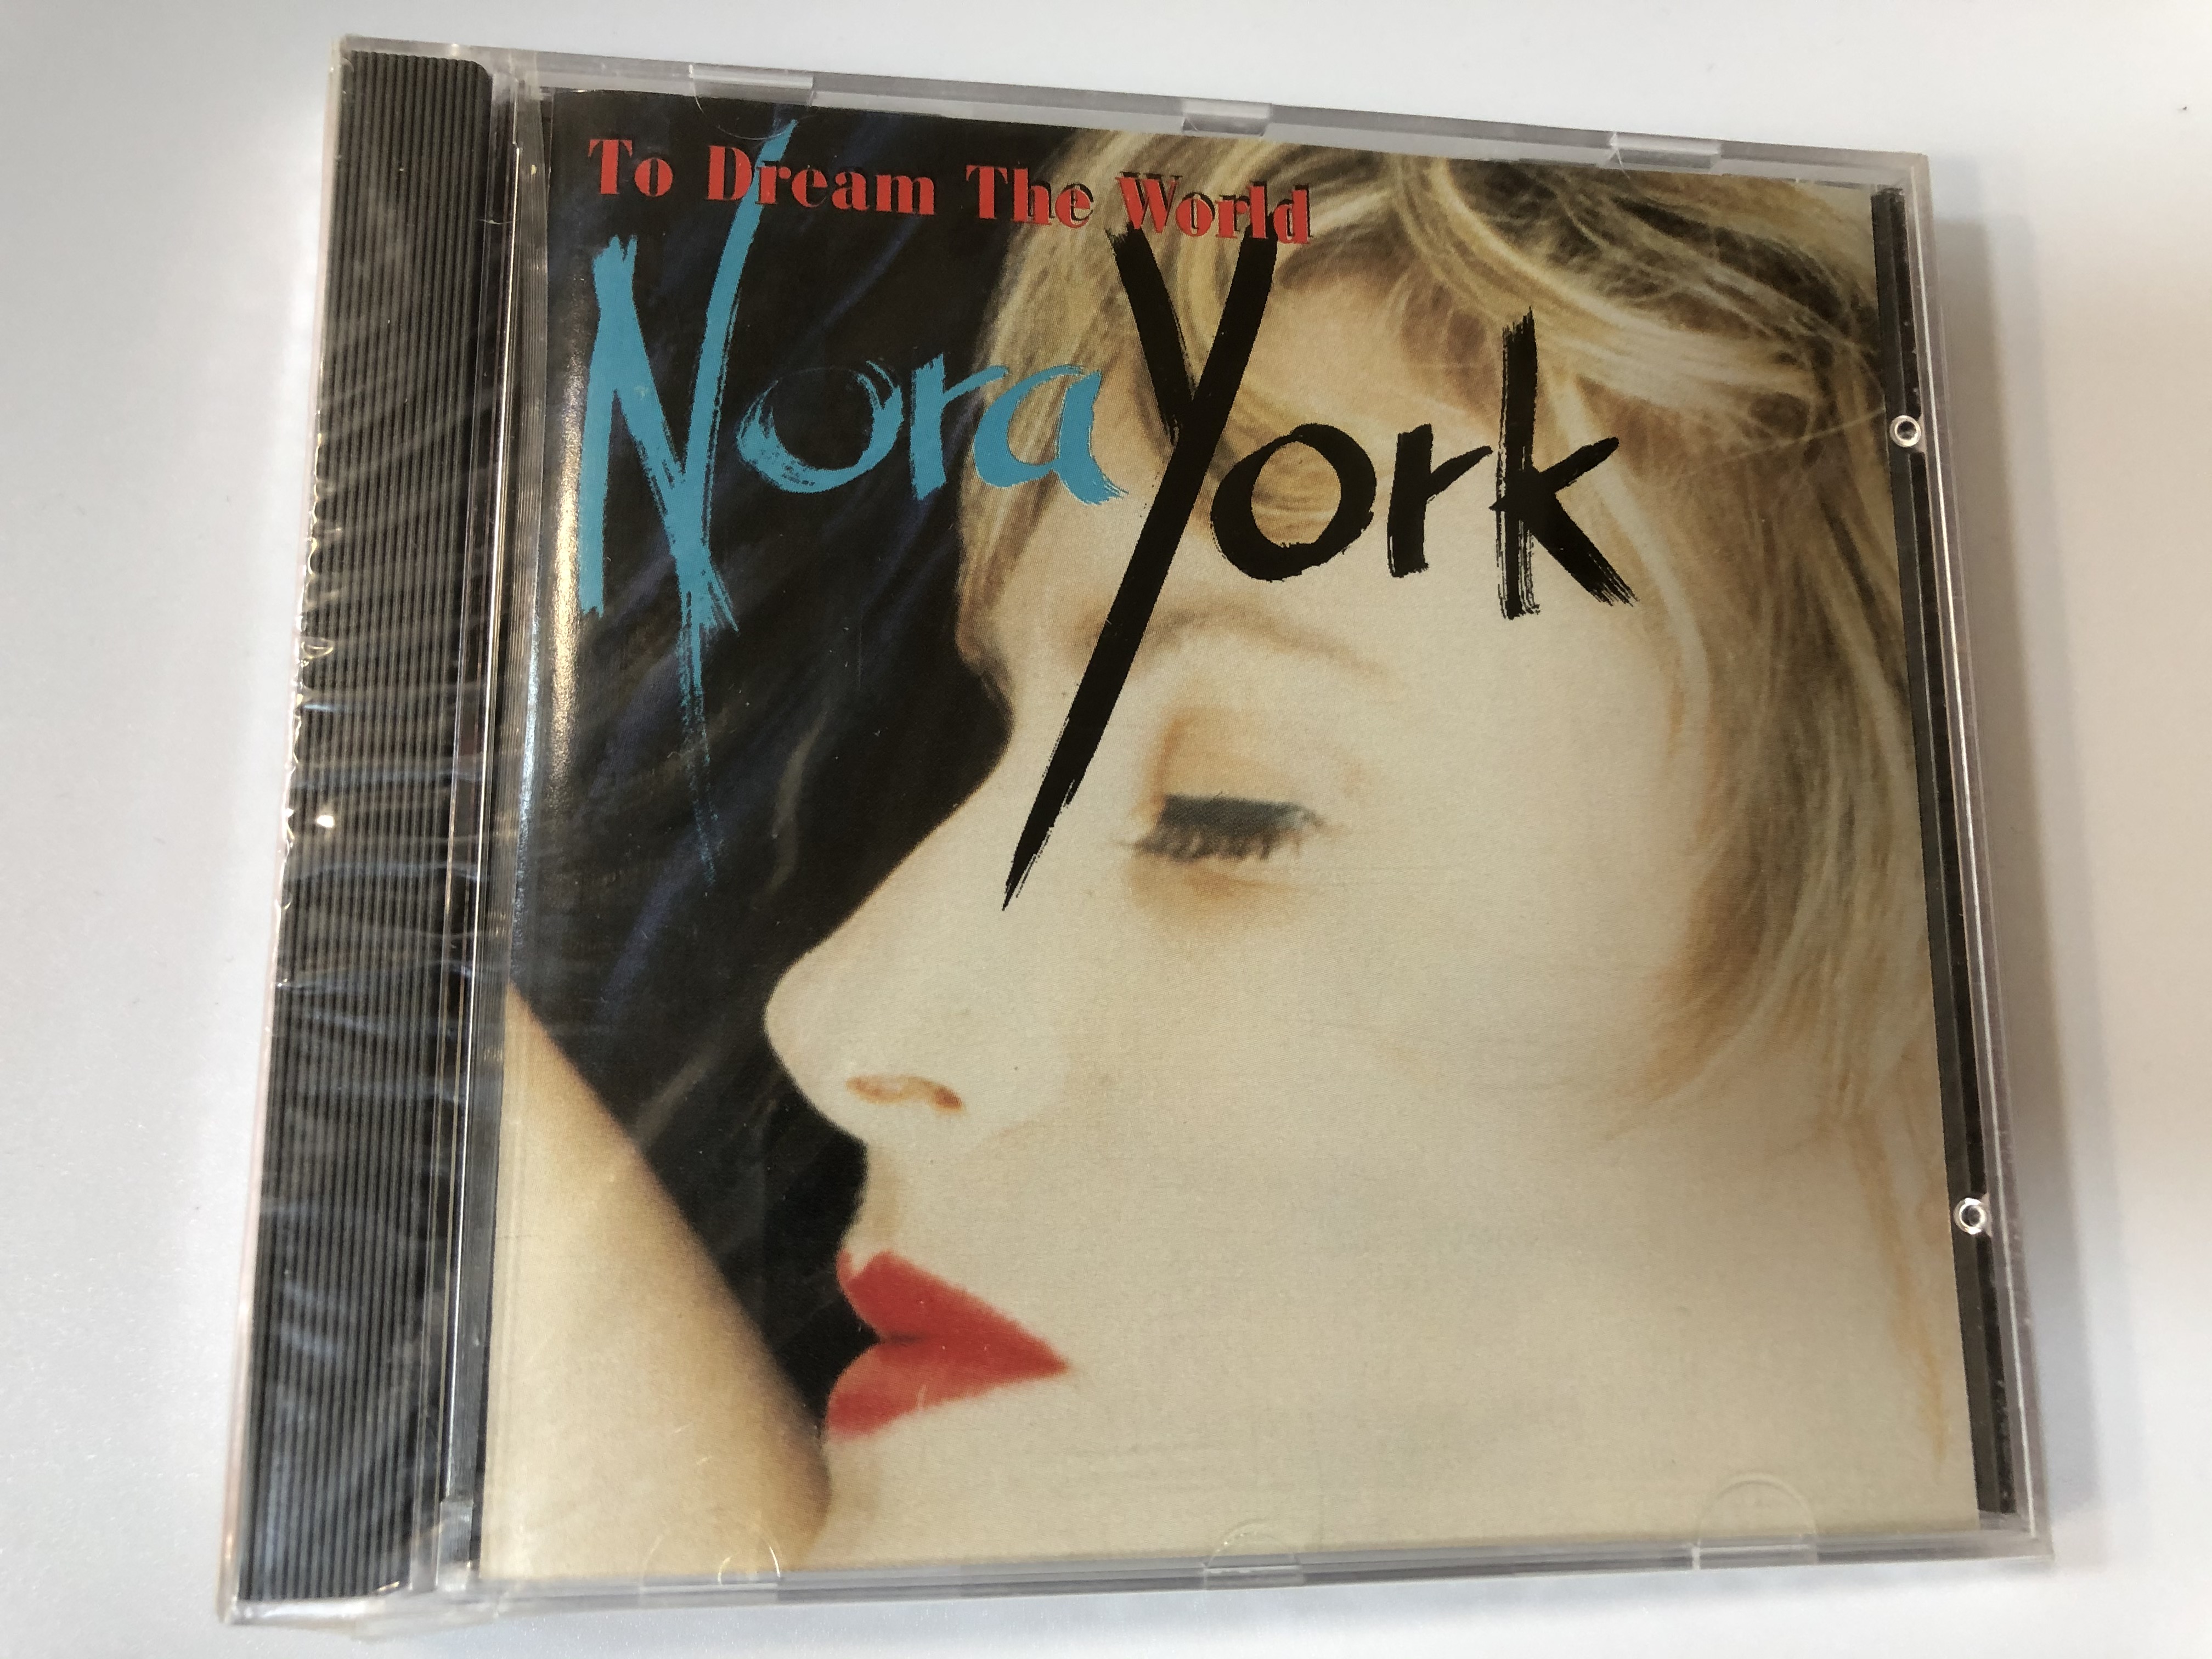 to-dream-the-world-nora-york-tcb-records-audio-cd-1994-tcb-94602-1-.jpg